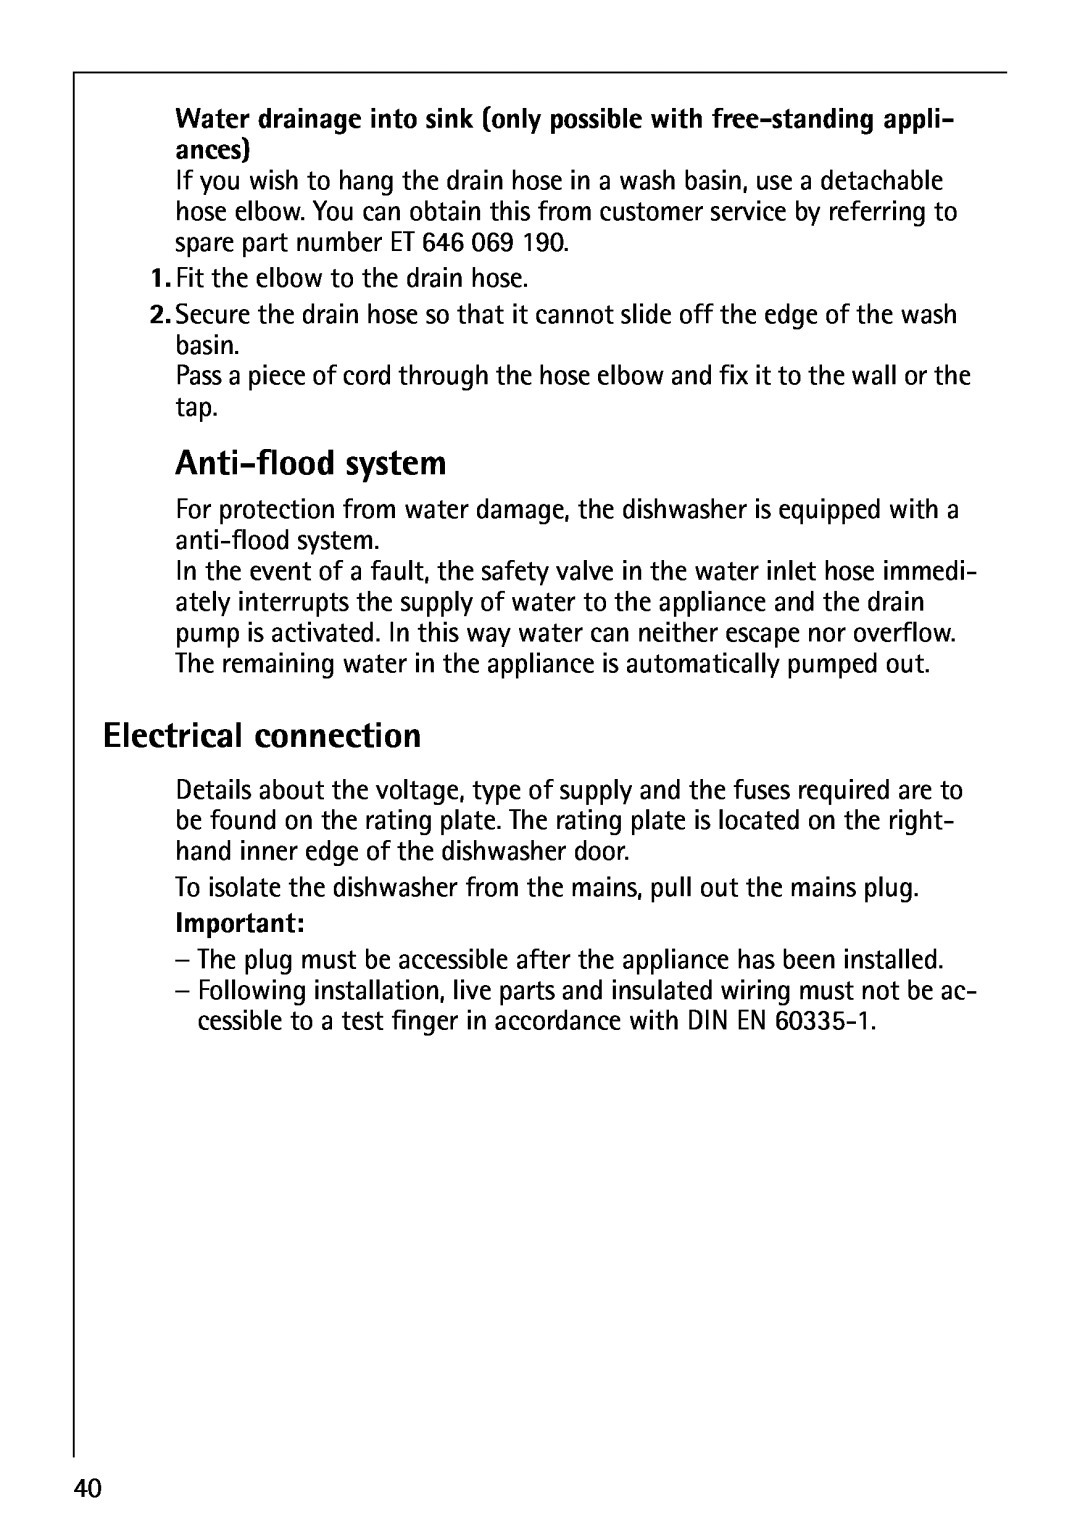 AEG 40860 manual Anti-floodsystem, Electrical connection 